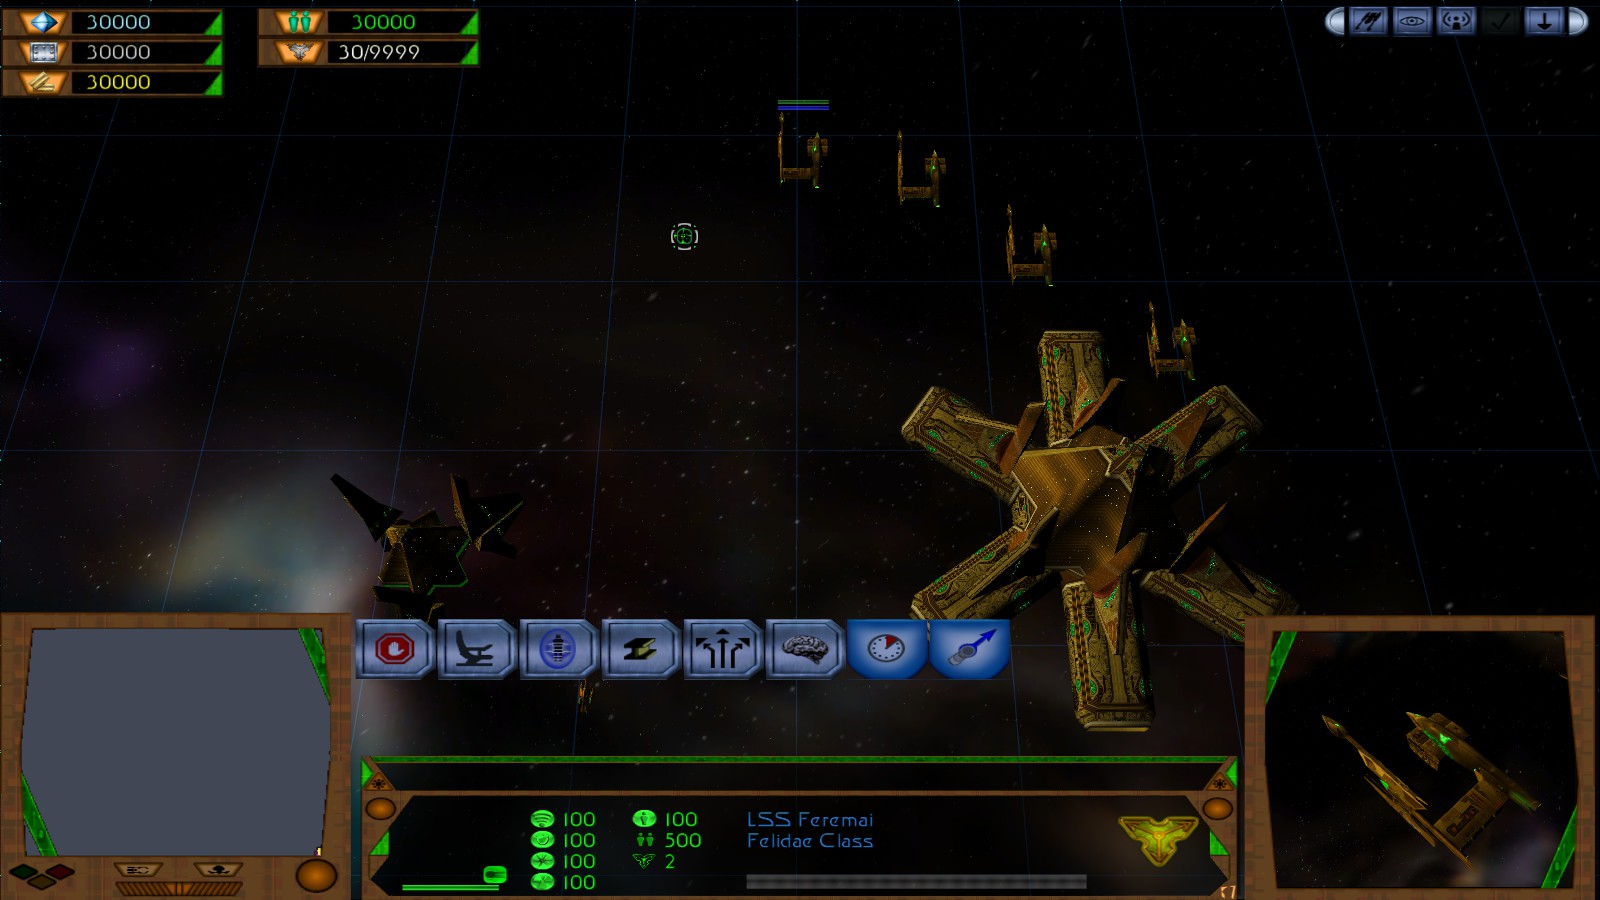 starfleet command 2 empires at war download